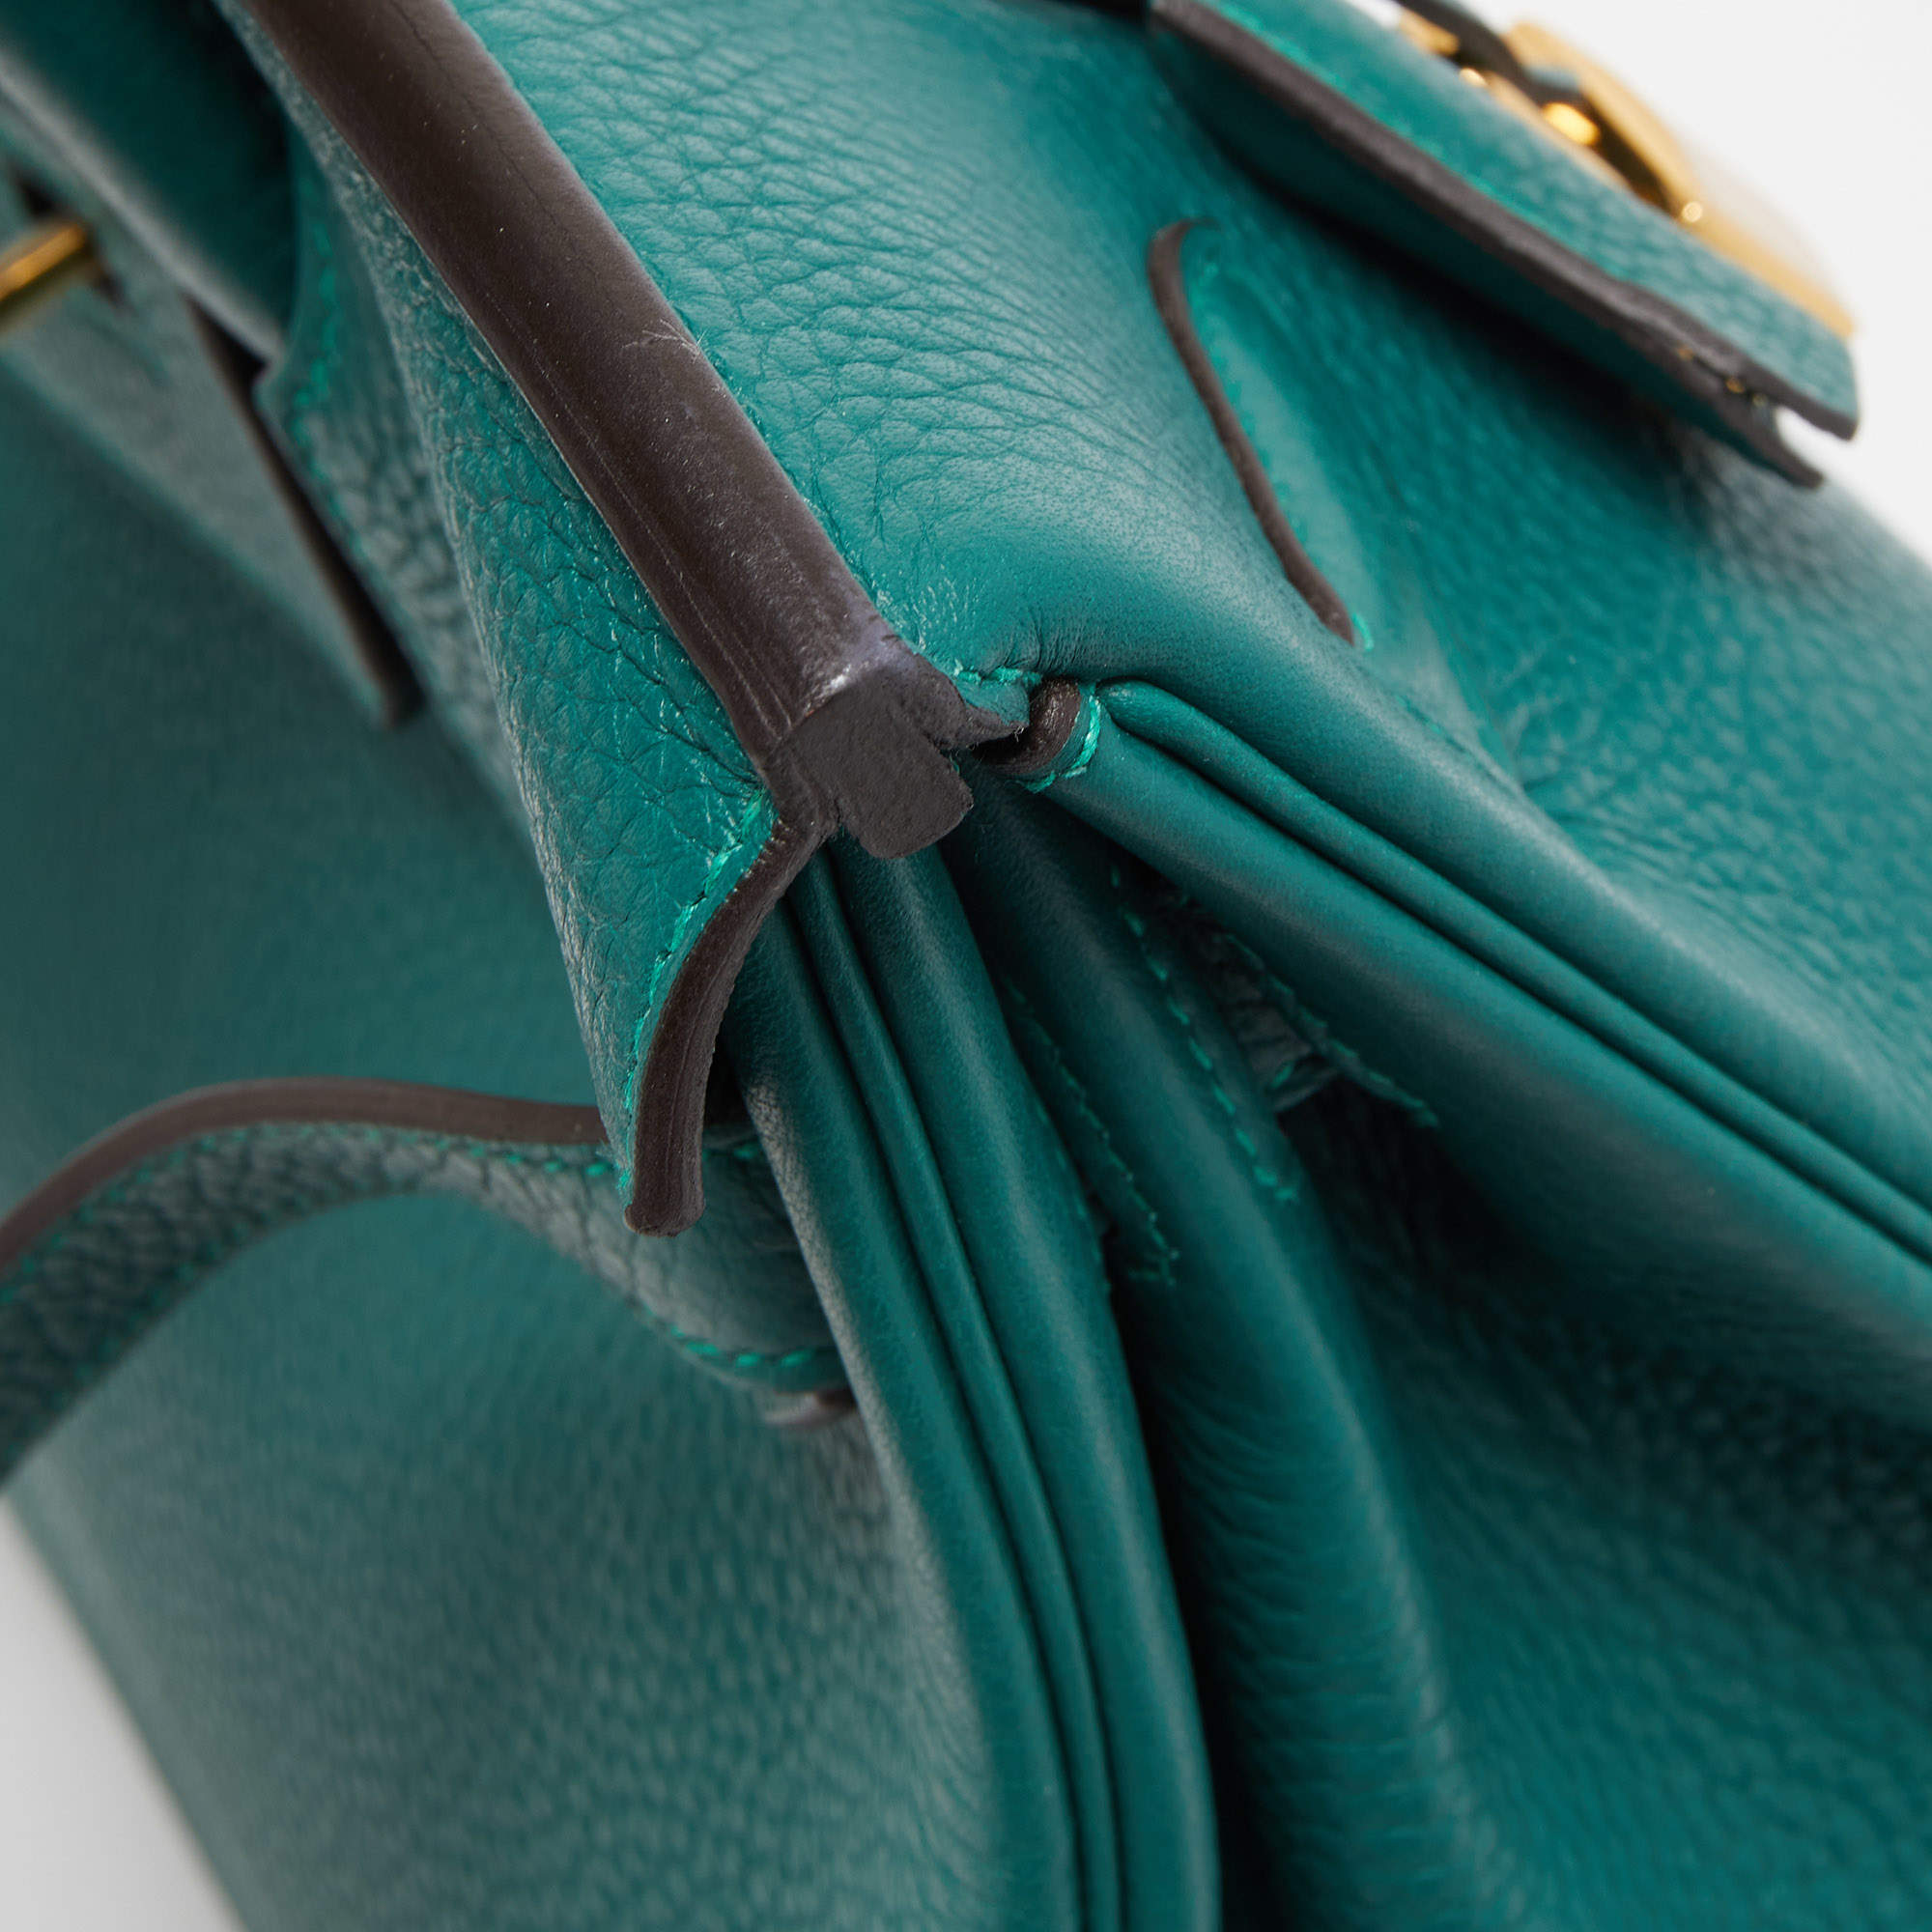 Hermès Birkin 30 Malachite Togo with Gold Hardware - Bags